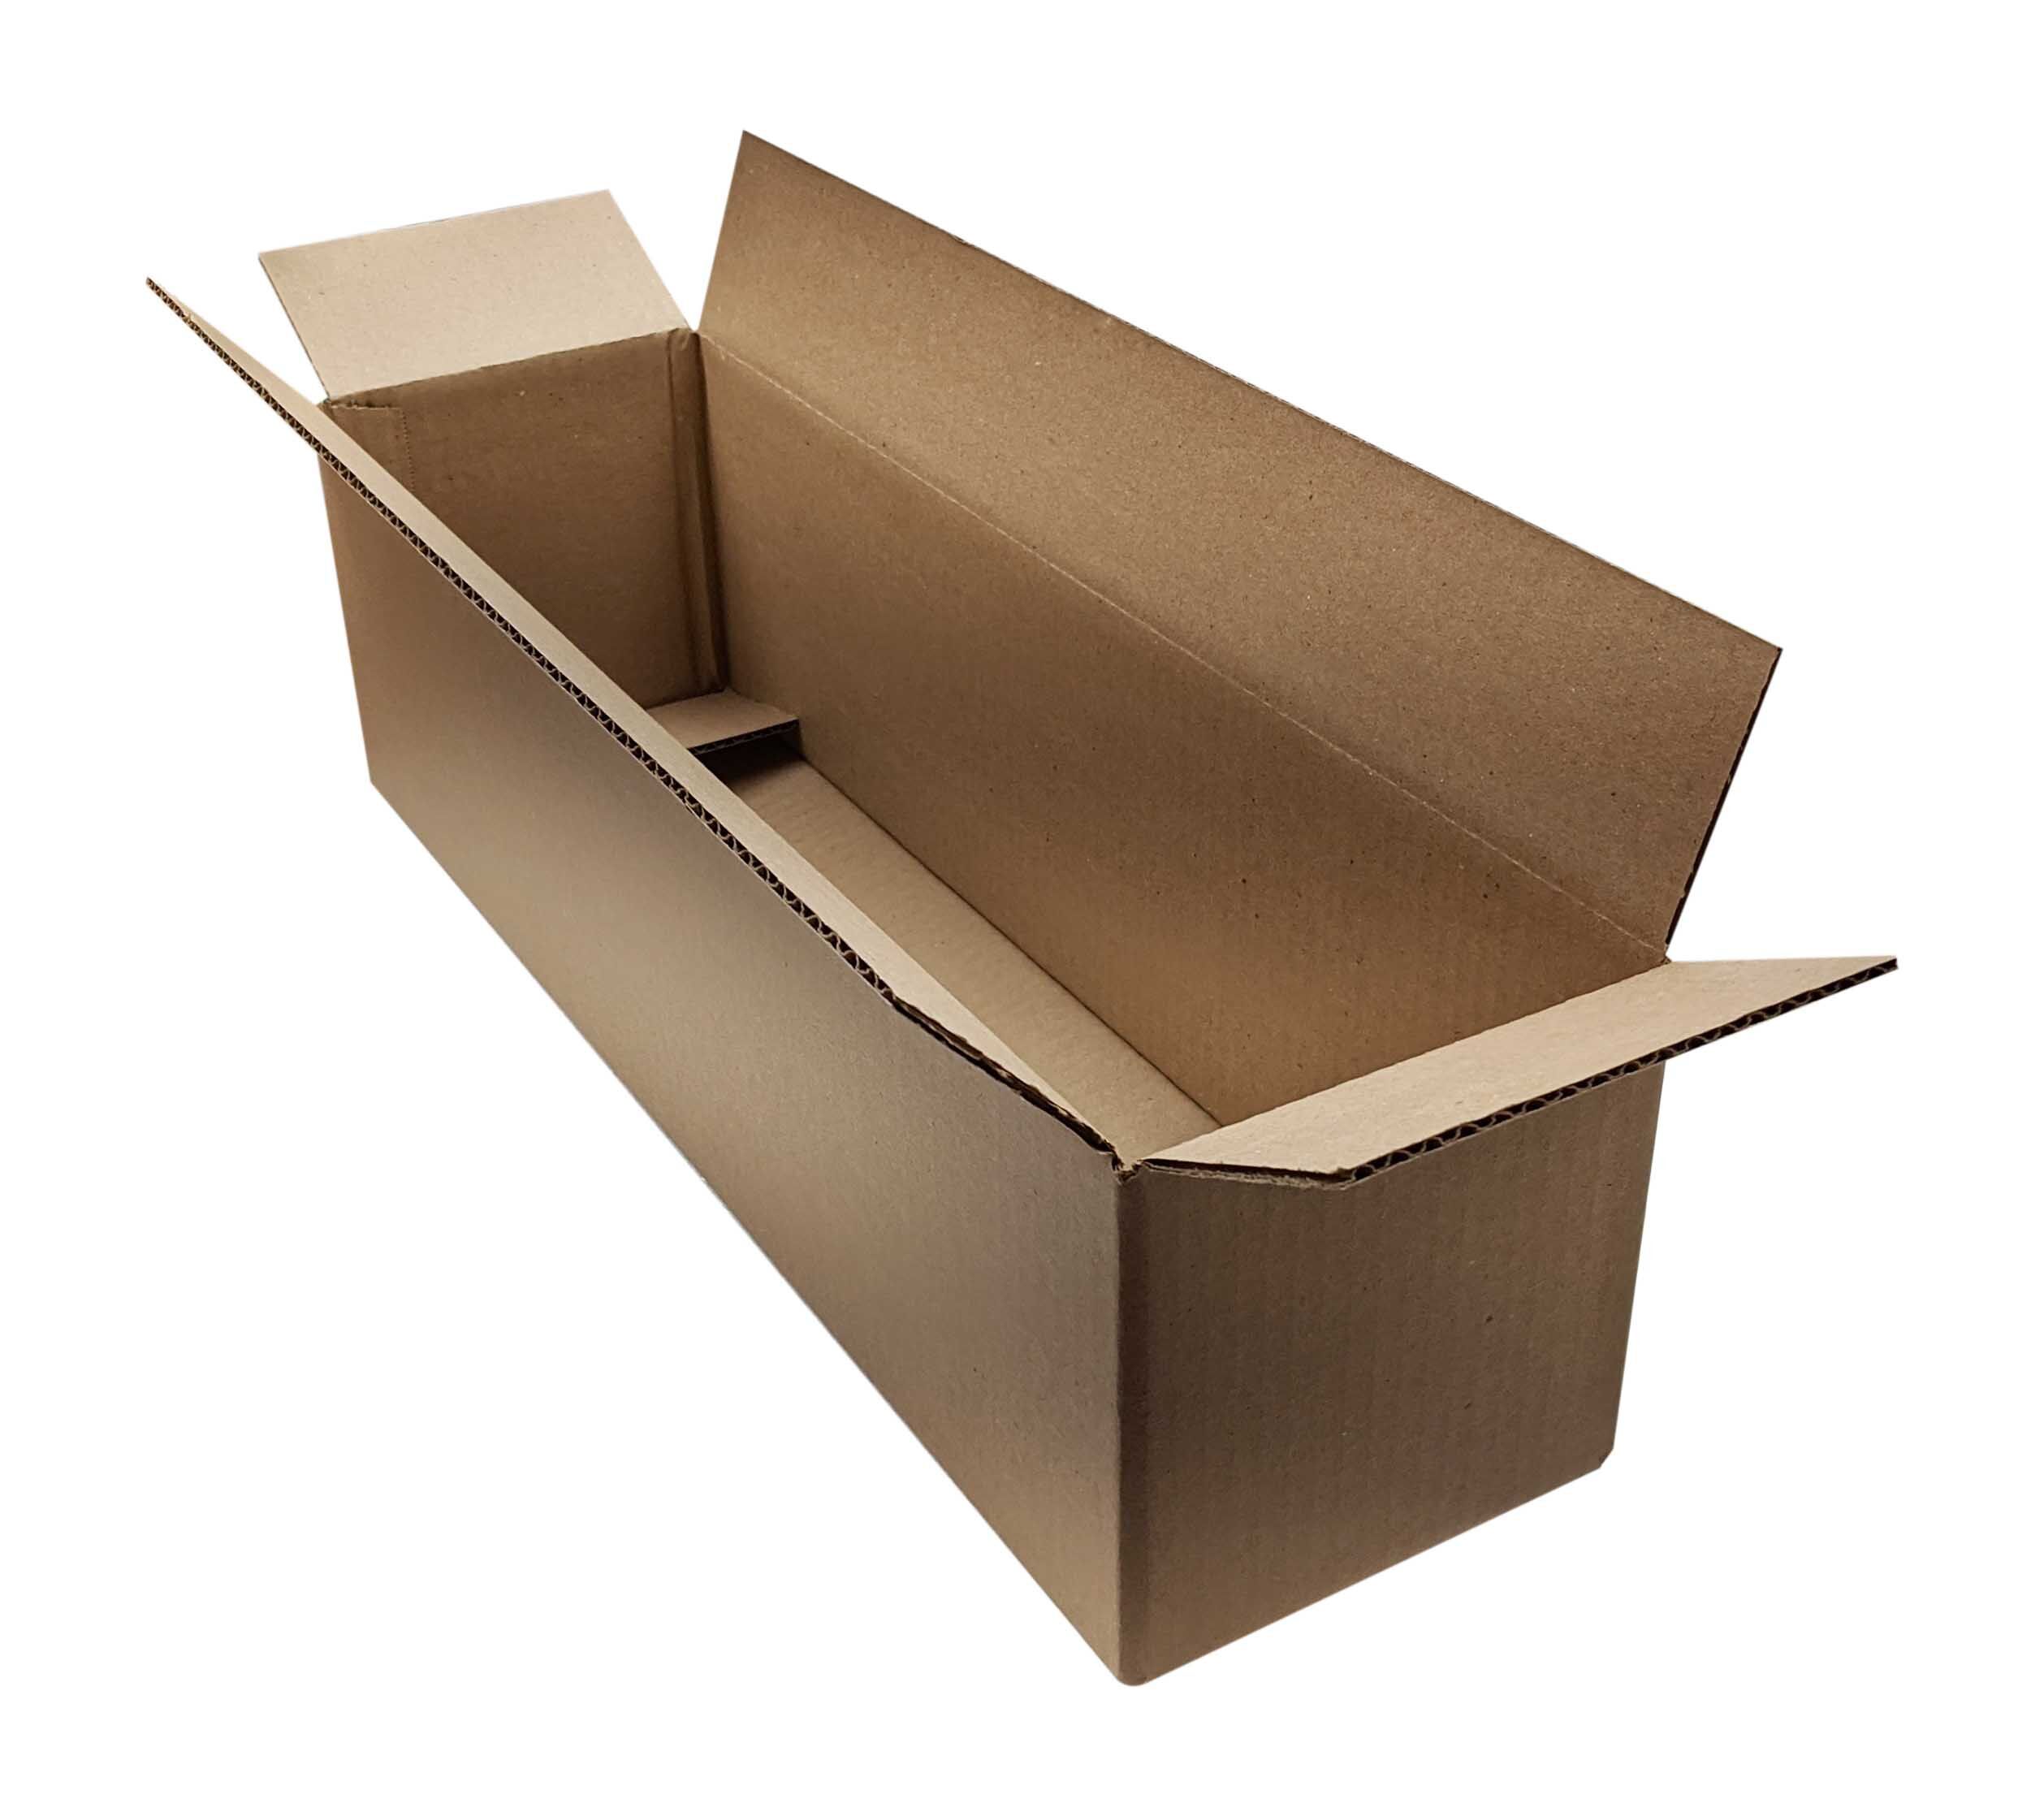 22" x 6" x 6" Corrugated Cardboard Boxes - 25 Boxes/Bundle